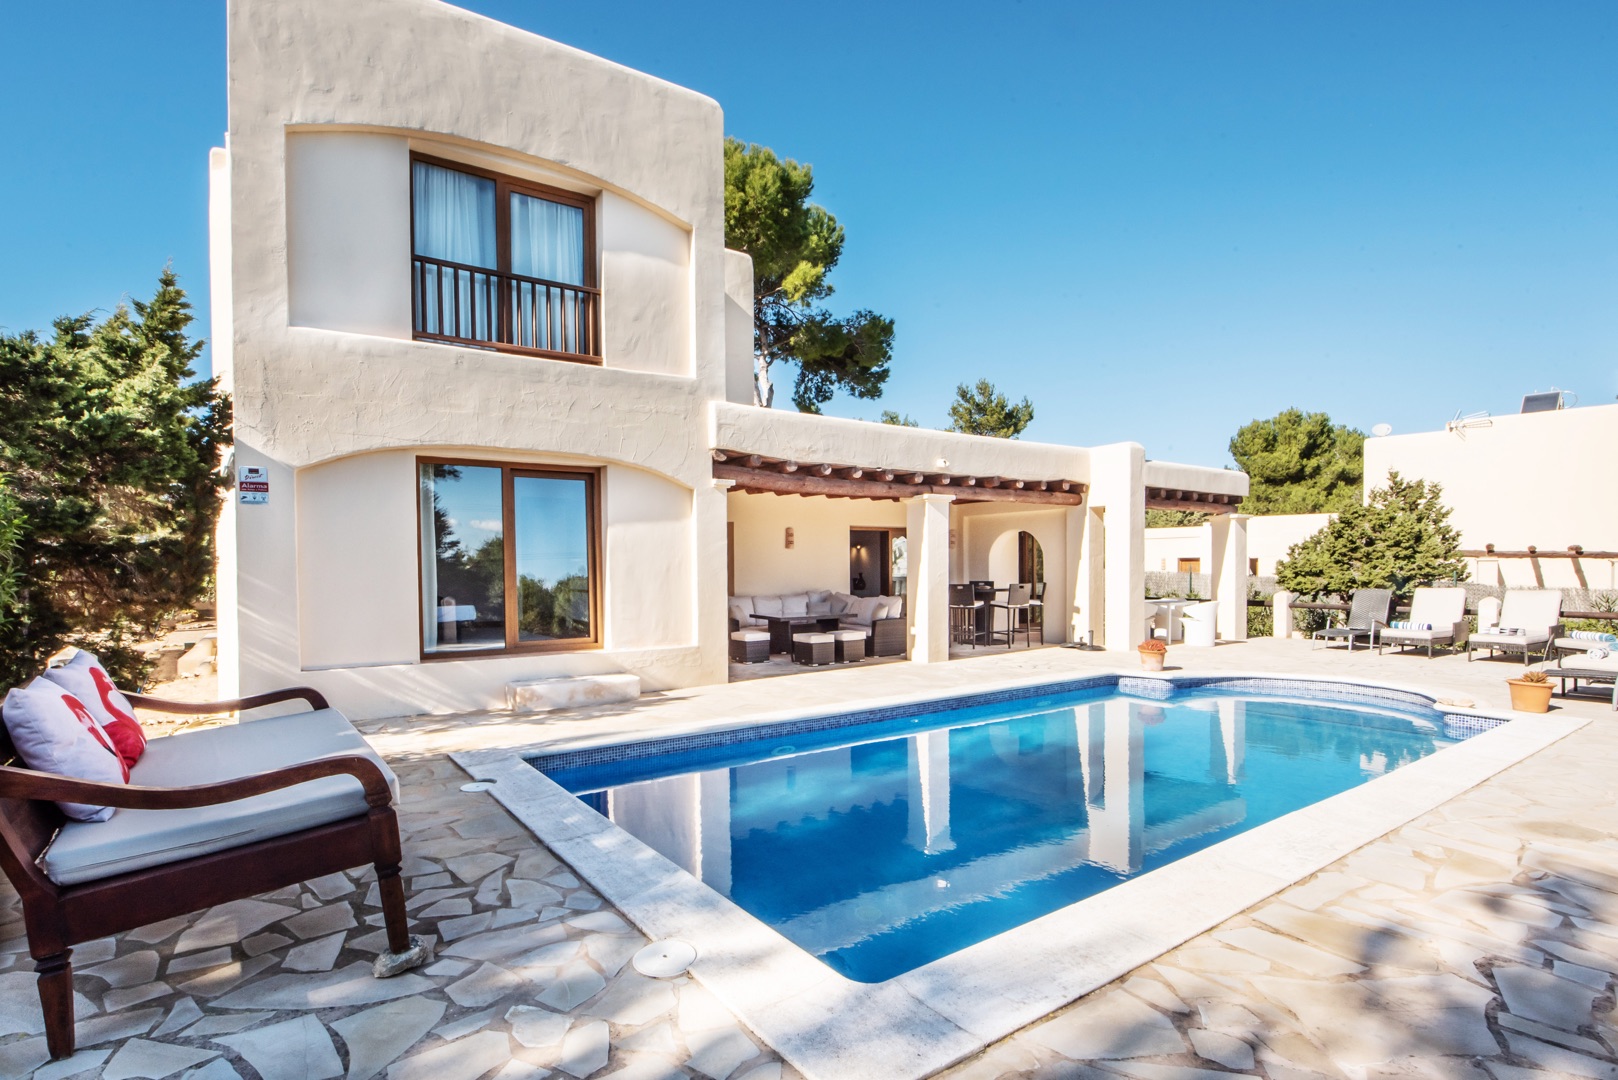 Lovely Ibiza Villa In Quiet Area Close To Cala Bassa Beach